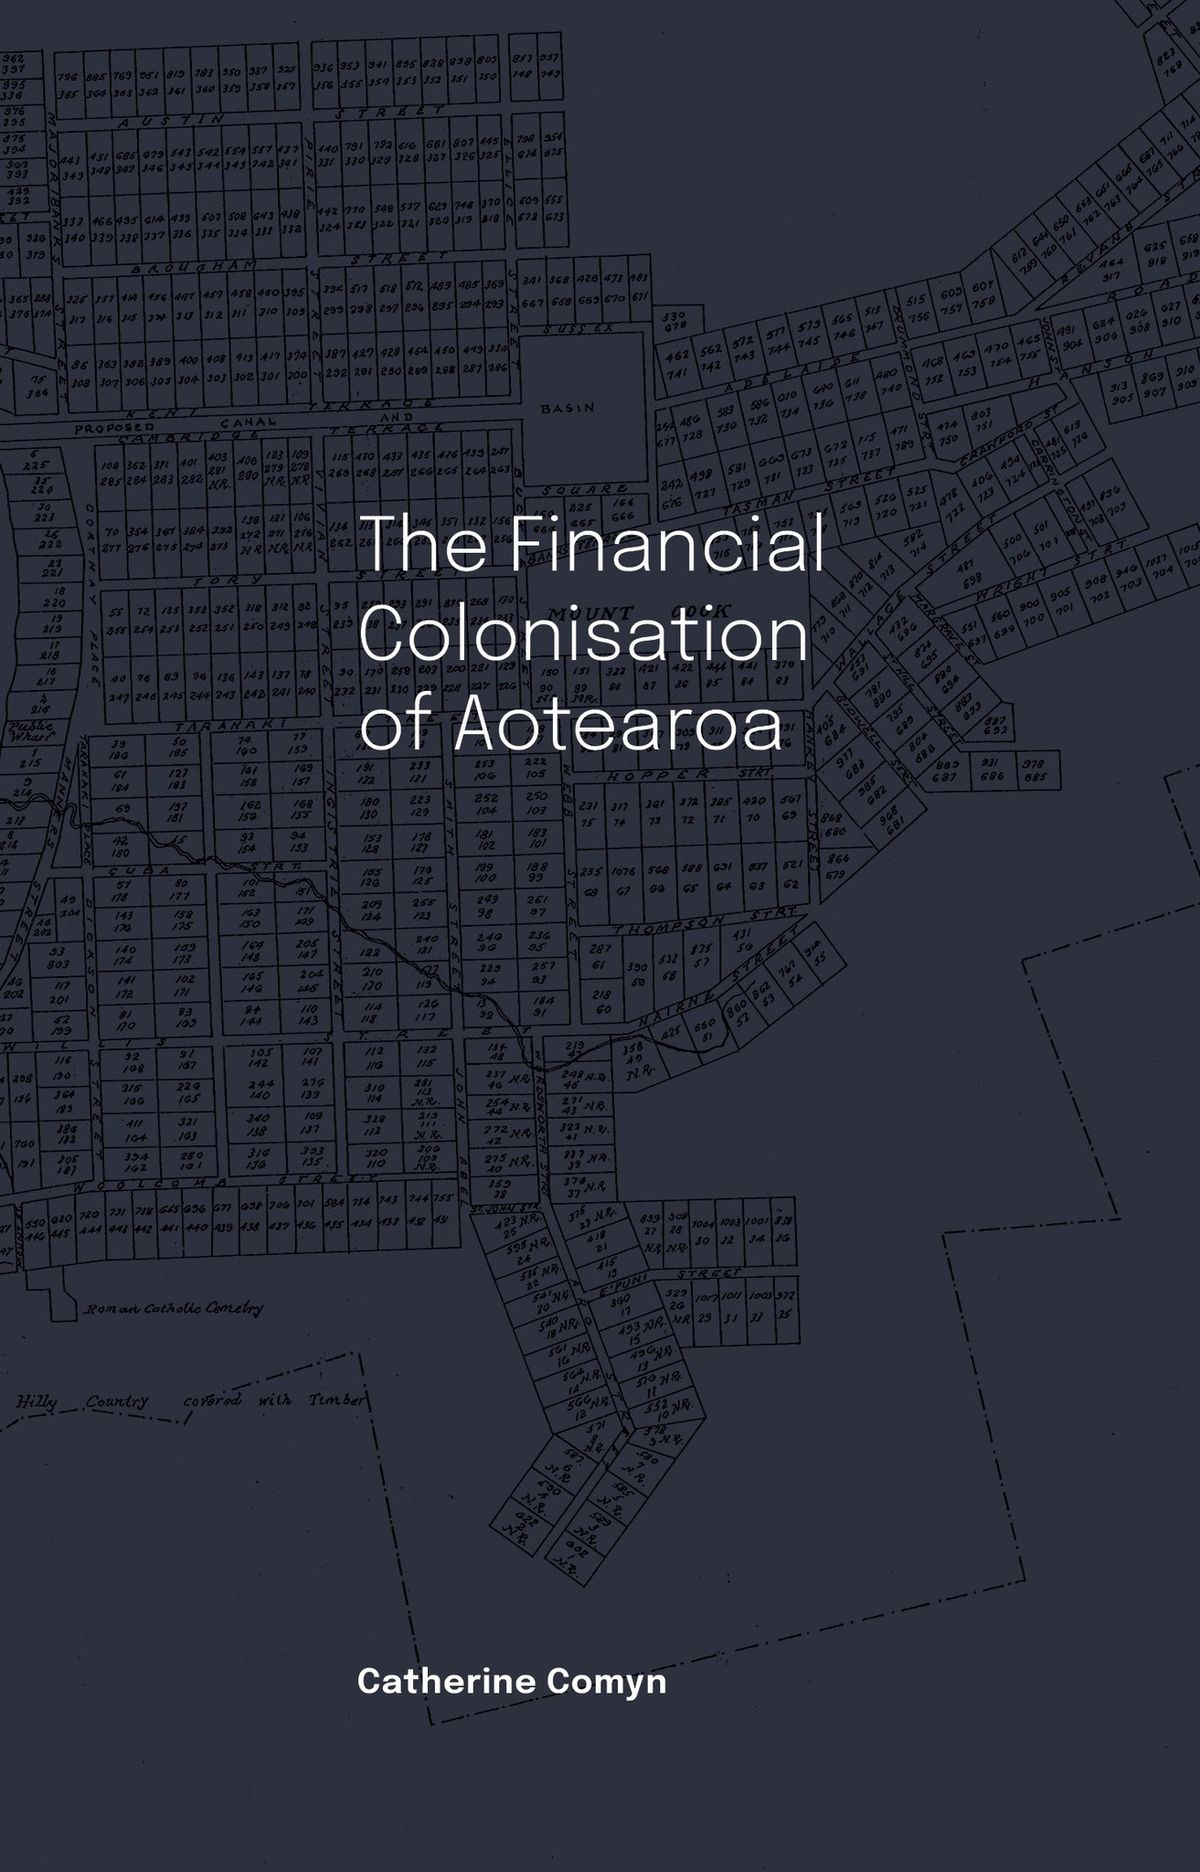 Catherine Comyn's The Financial Colonisation of Aotearoa